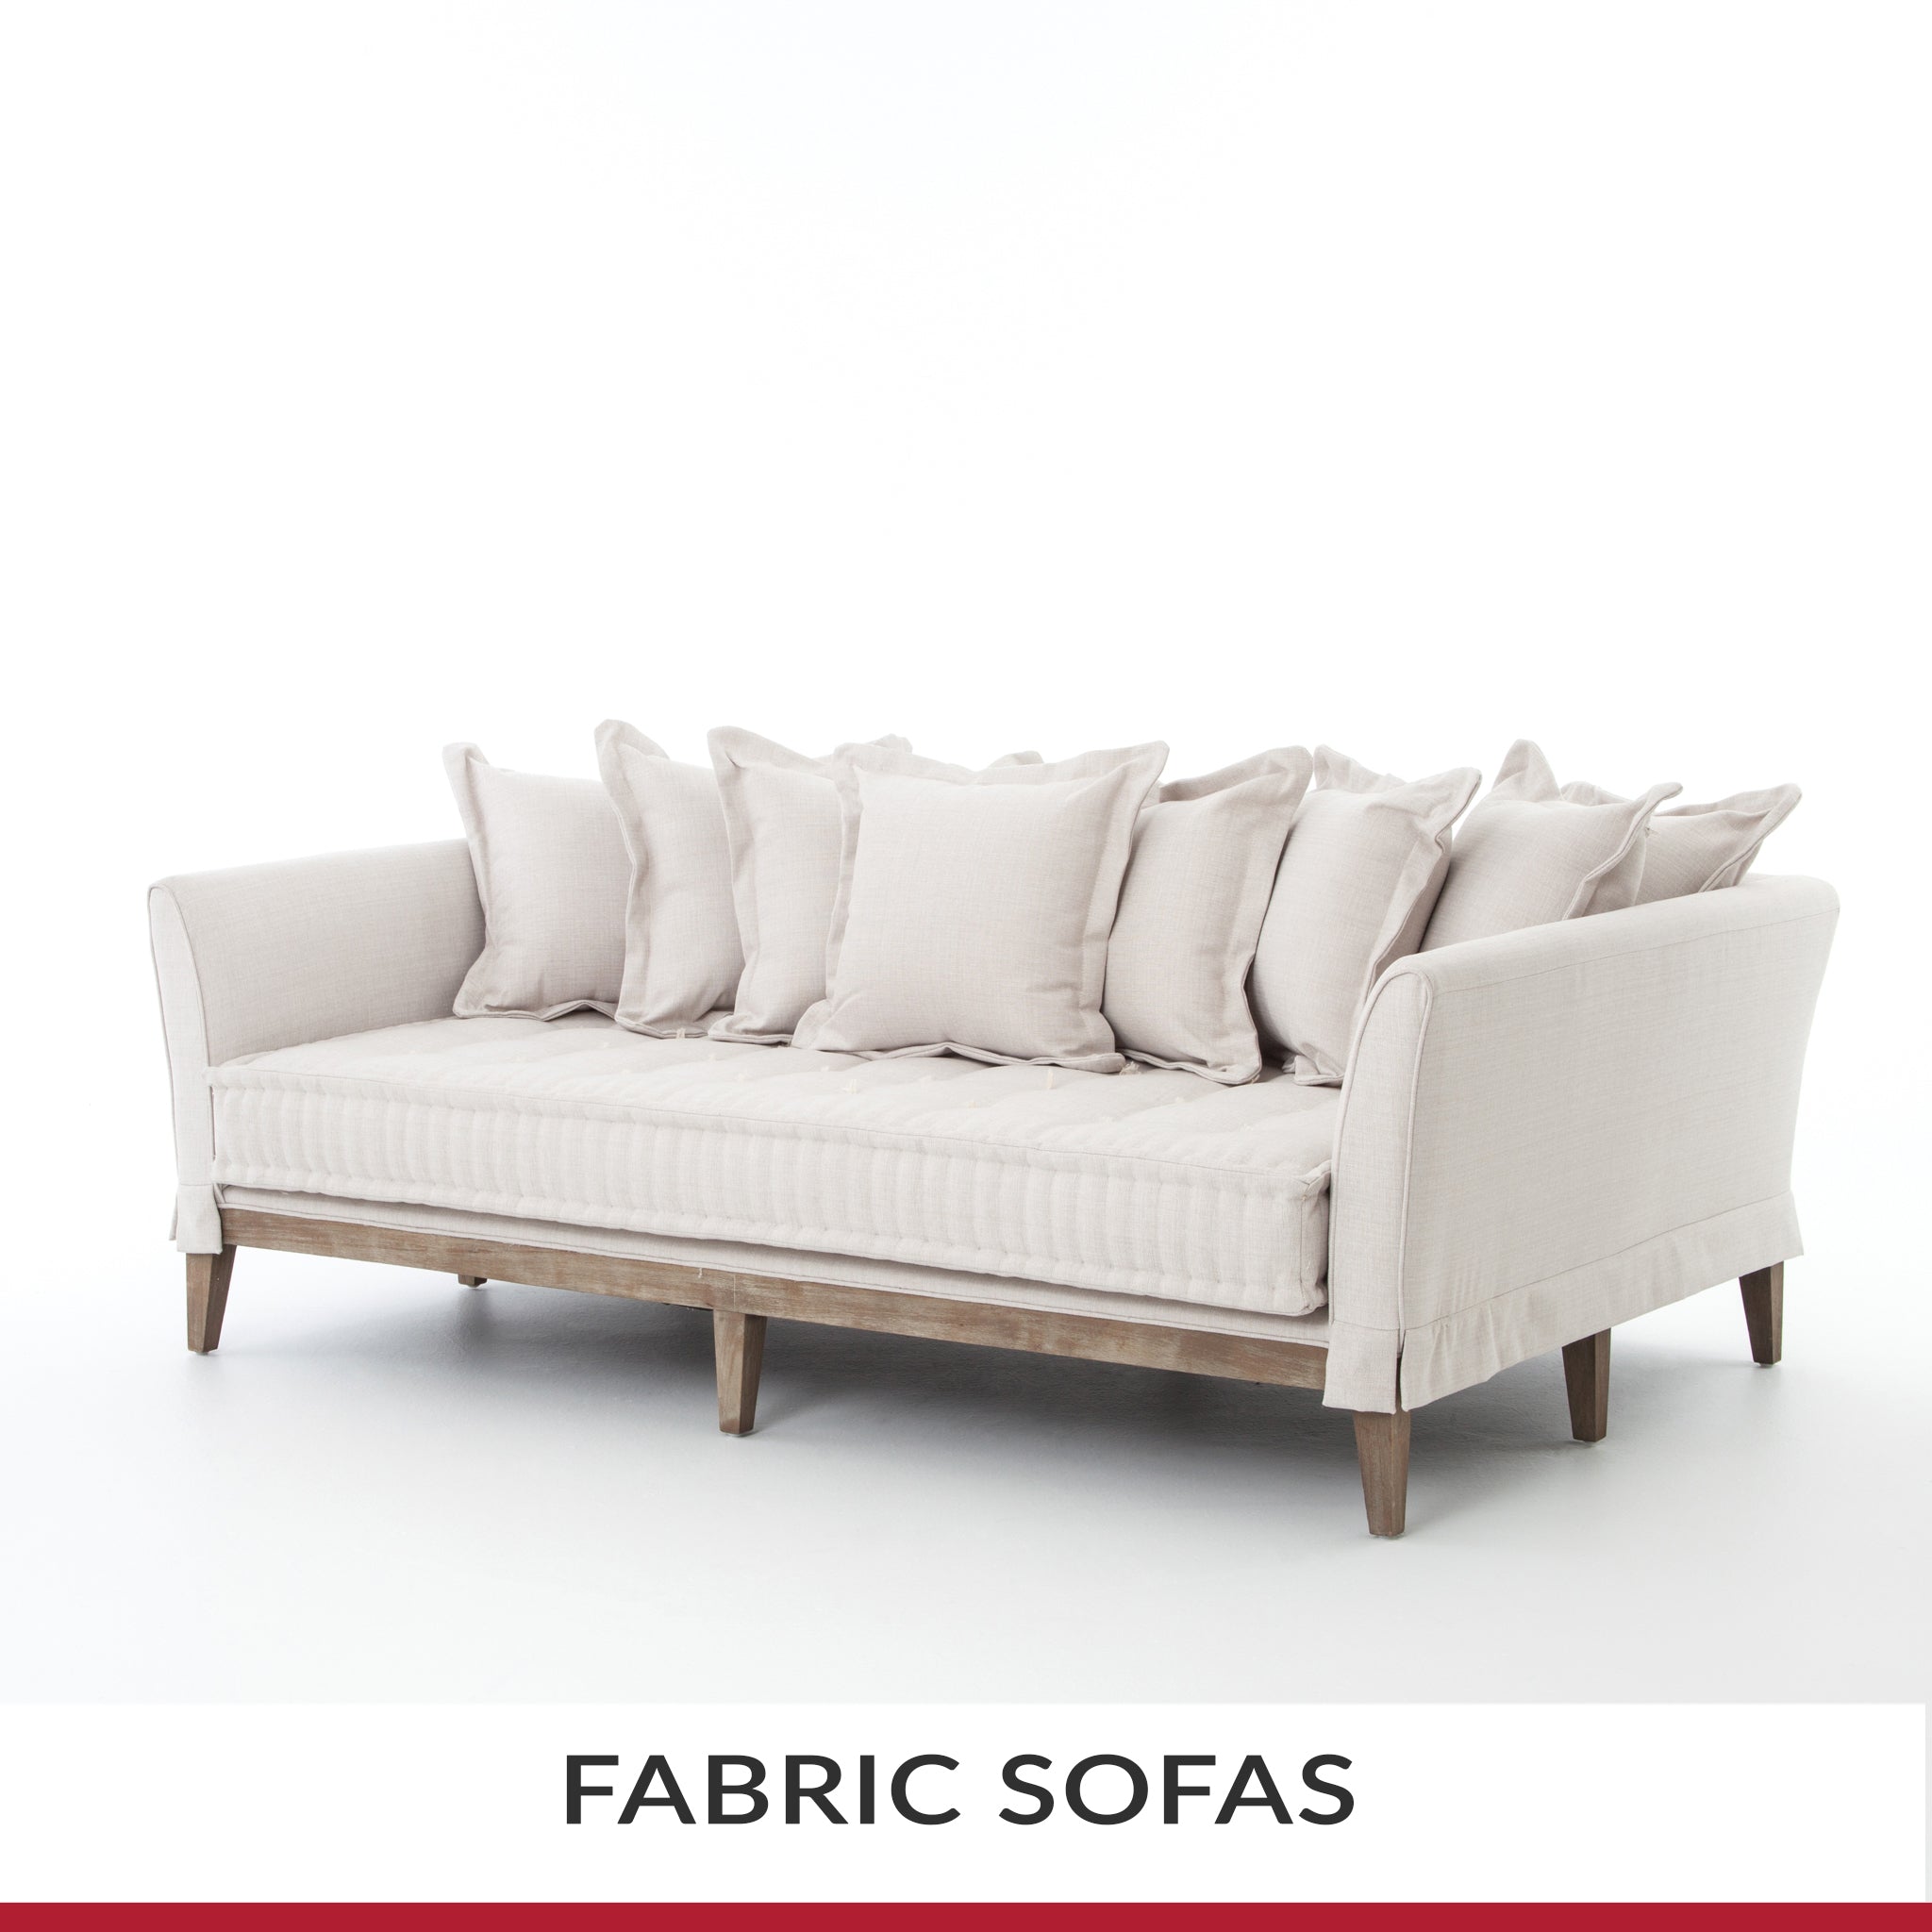 Fabric Sofas